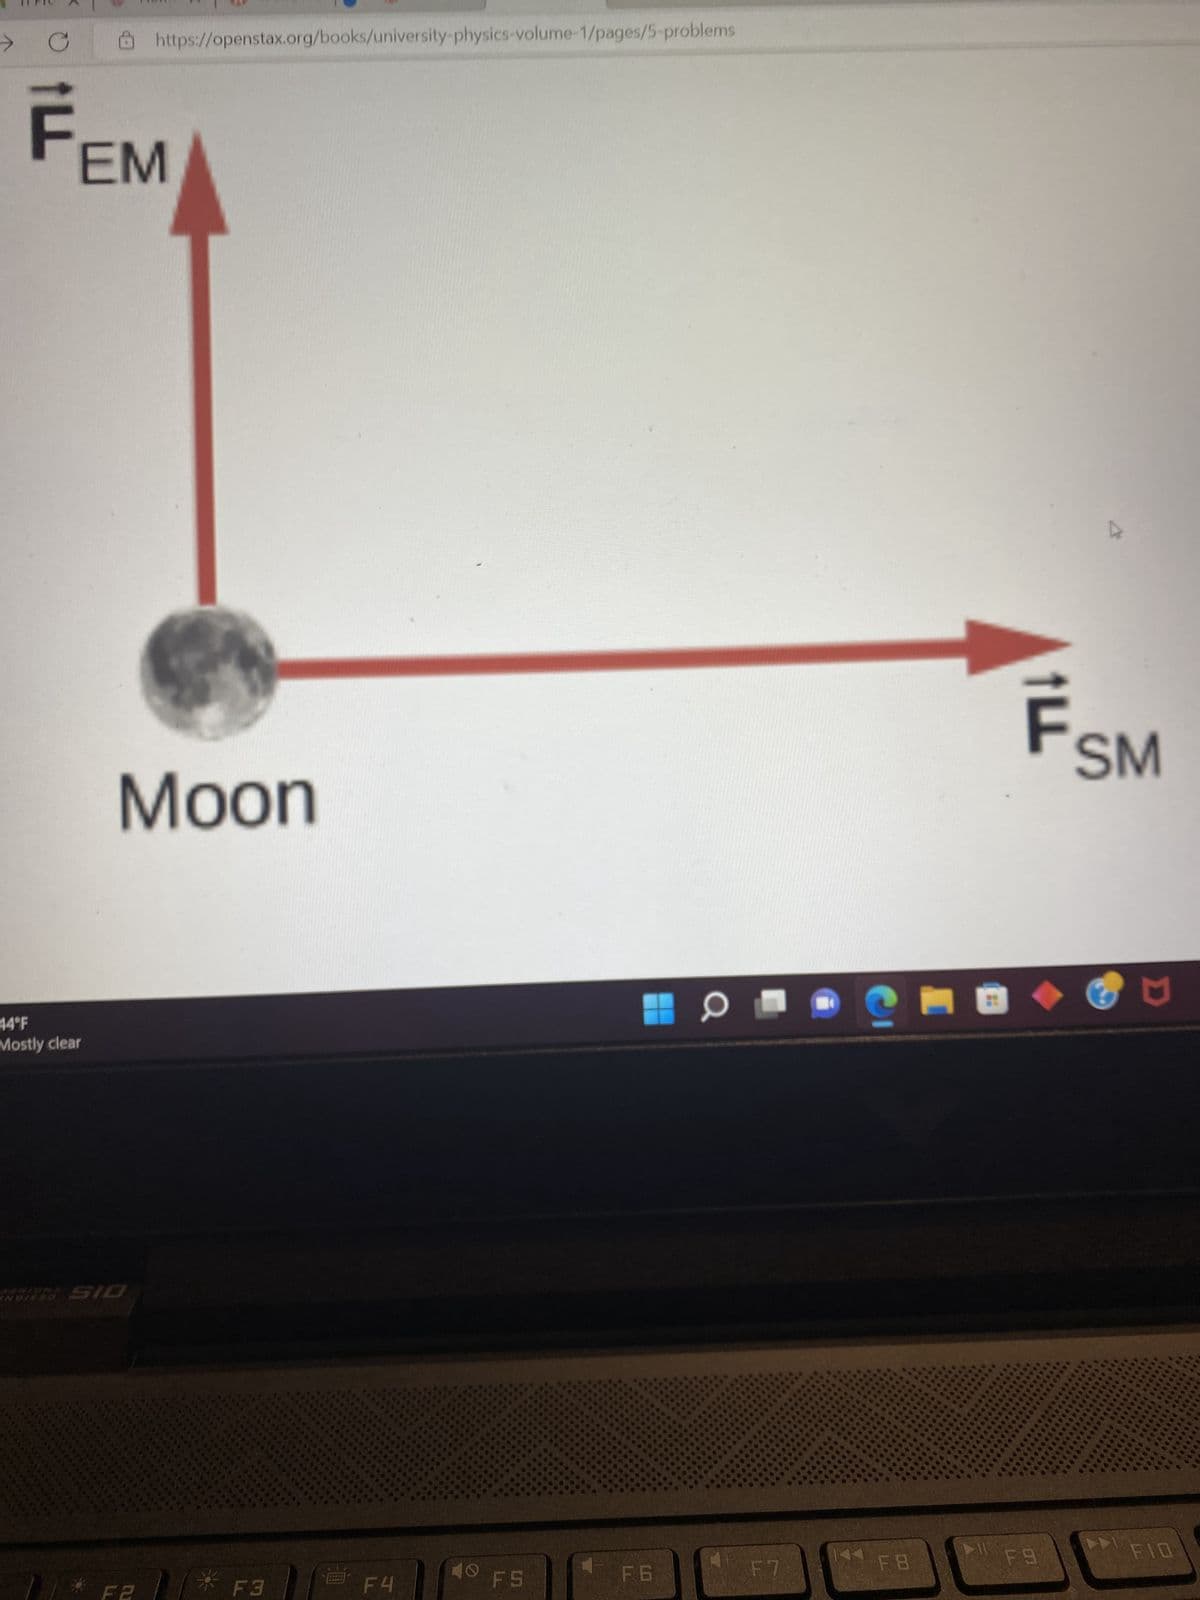 K
C
FEM
44°F
Mostly clear
https://openstax.org/books/university-physics-volume-1/pages/5-problems
Moon
SIO
Fa
* F3
F4
FS
F6
C
F7
F8
↑L
F9
SM
D
FIO